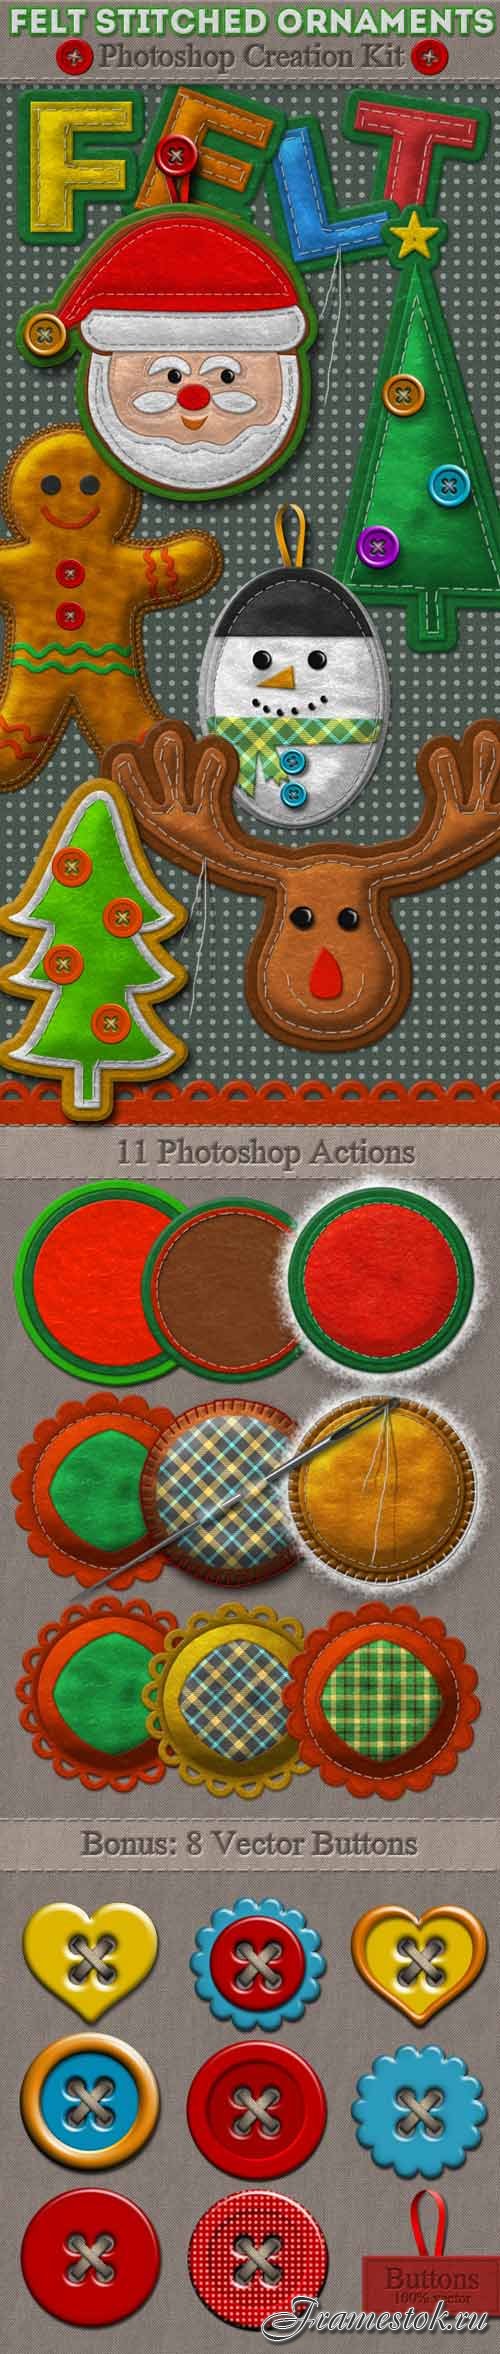 Graphicriver - Felt Stitched Ornaments Photoshop Creation Kit 9693079